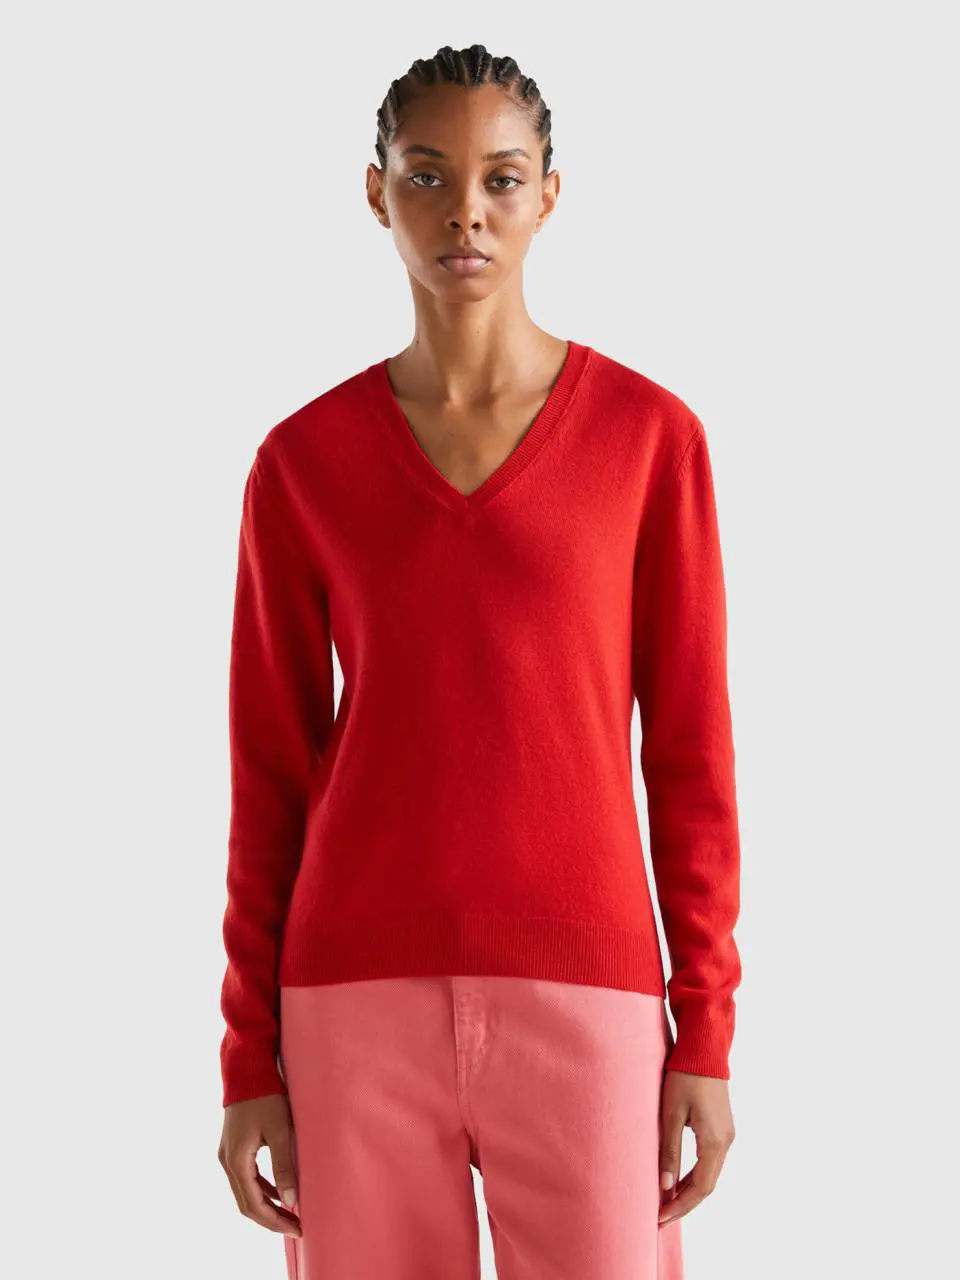 Benetton red v-neck sweater in pure merino wool. 1